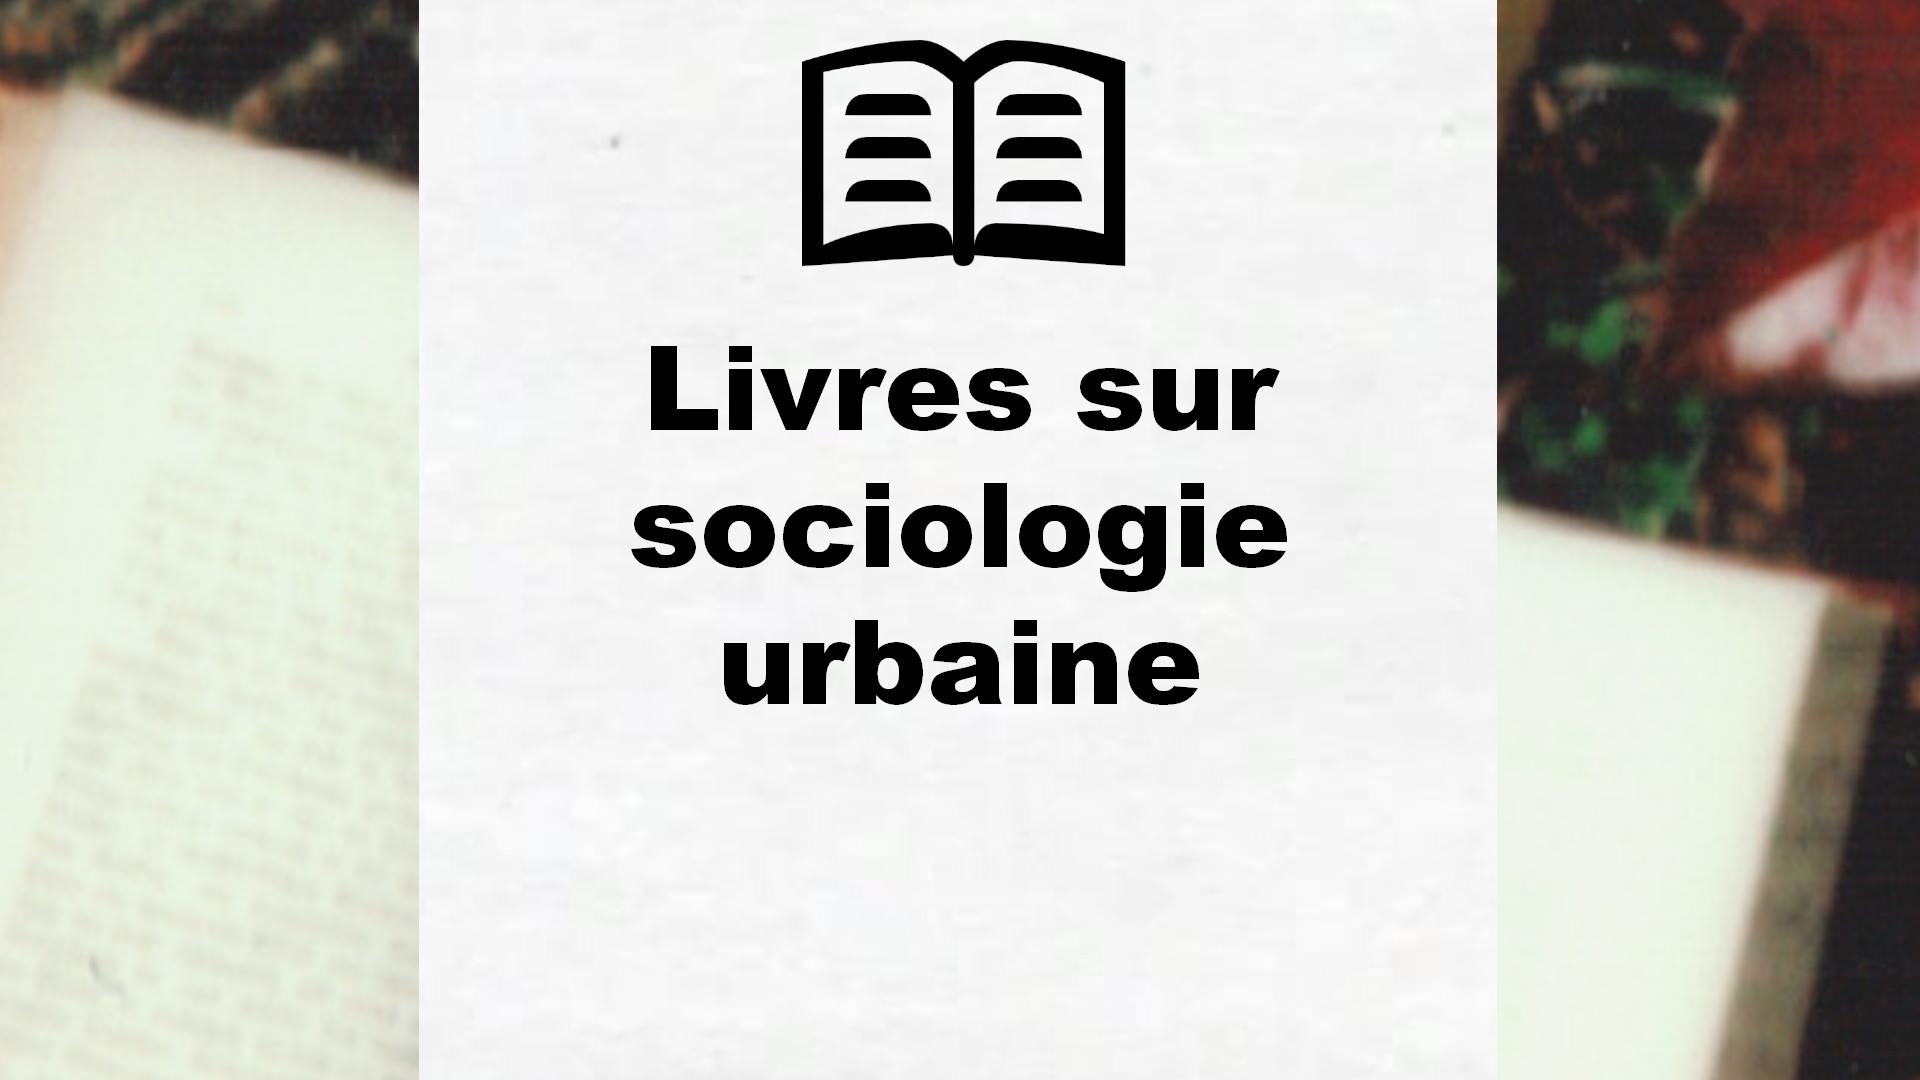 Livres sur sociologie urbaine